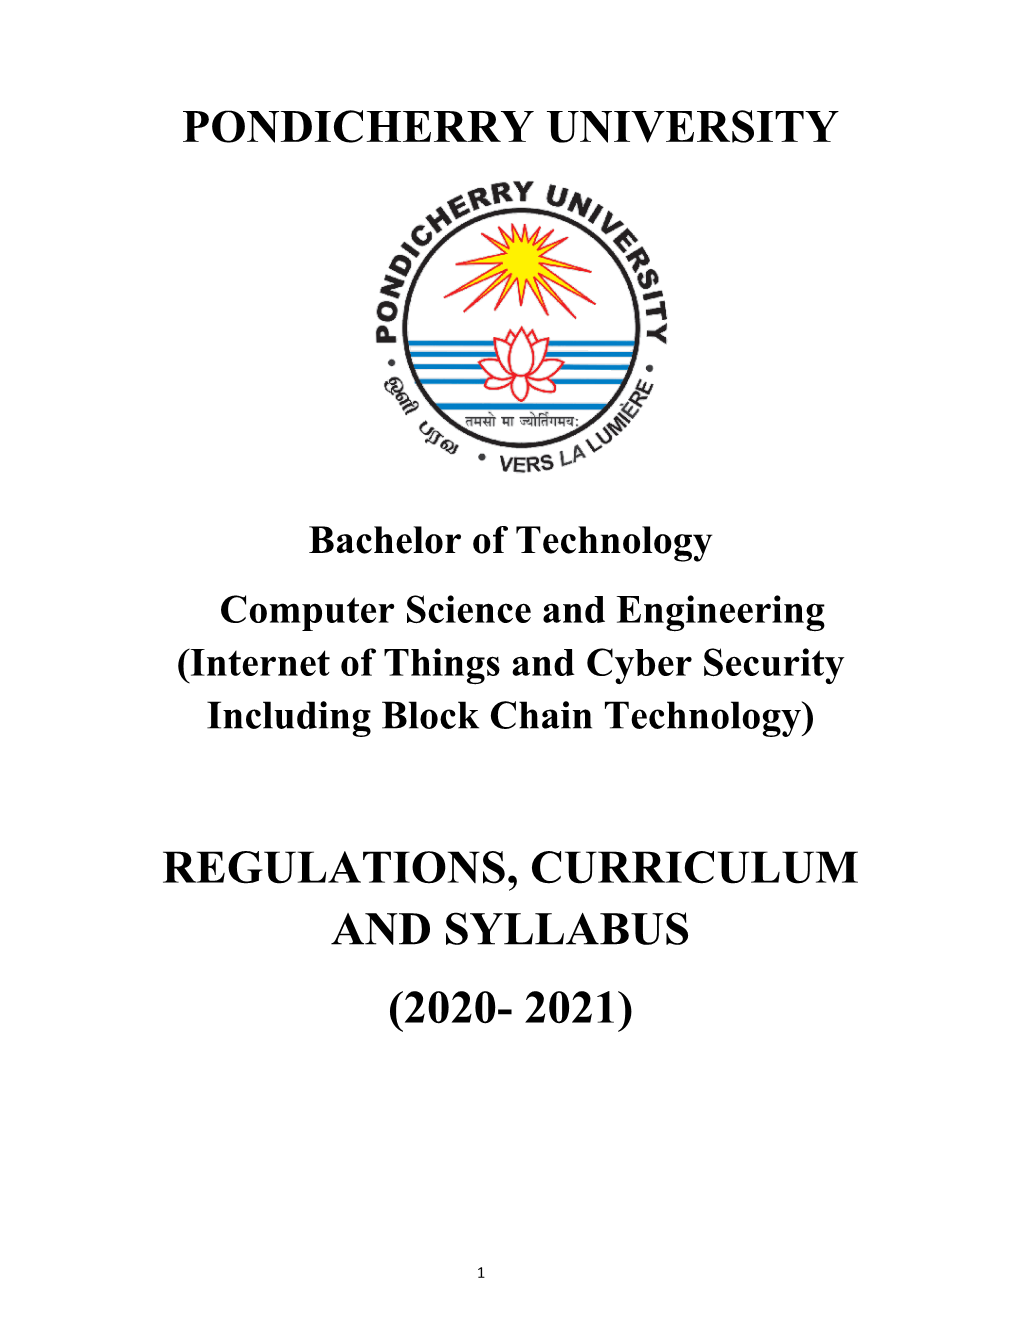 Pondicherry University Regulations, Curriculum and Syllabus (2020- 2021)